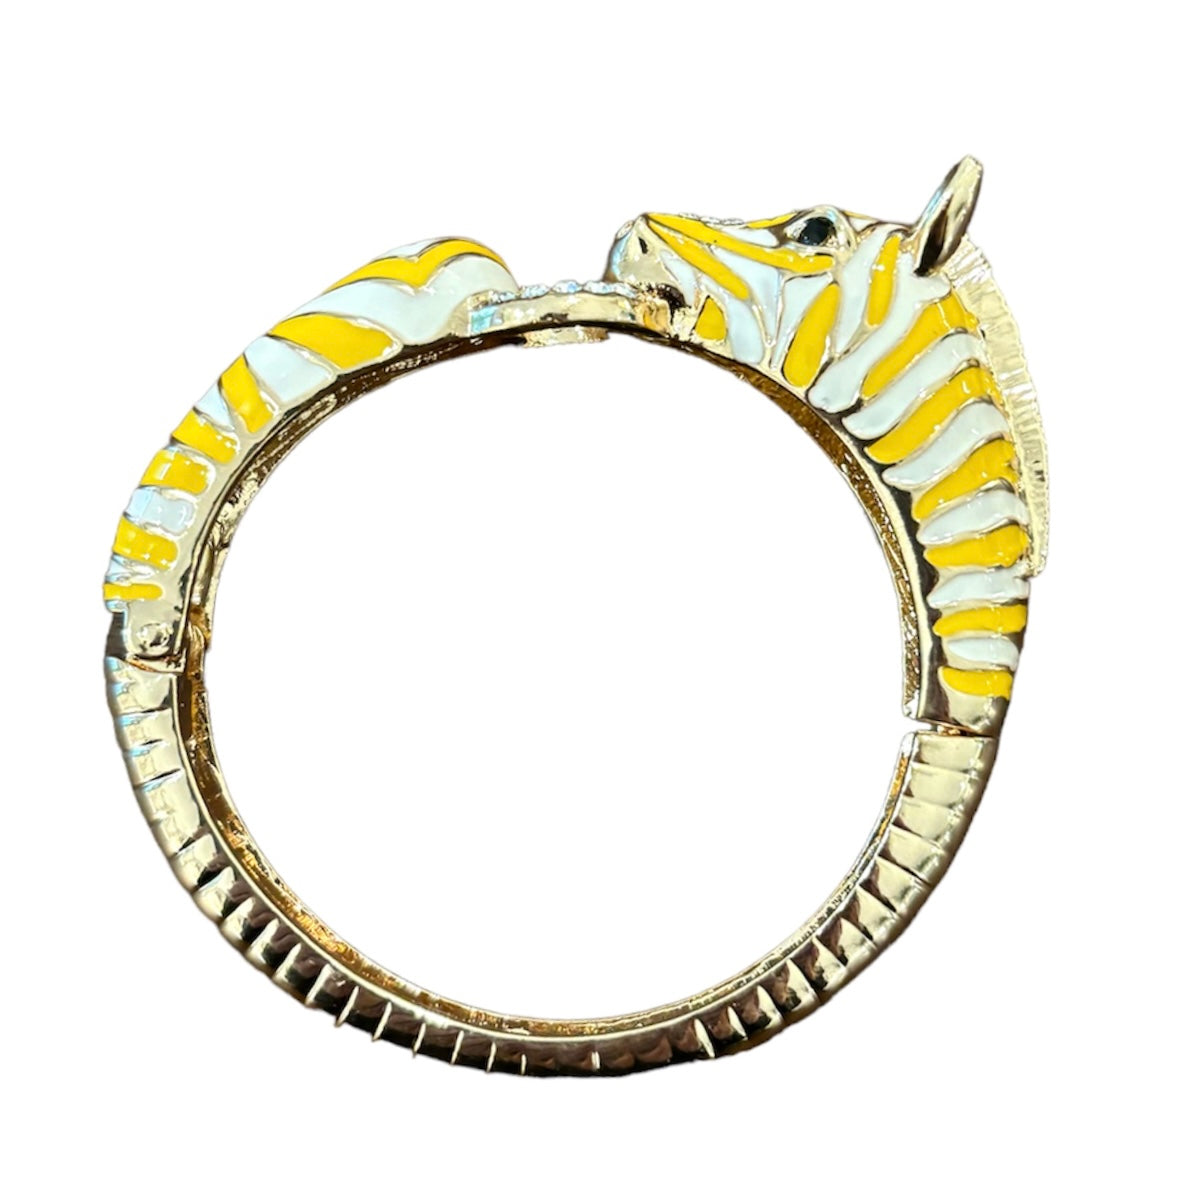 Zebra Hinged Bracelet in Yellow/White